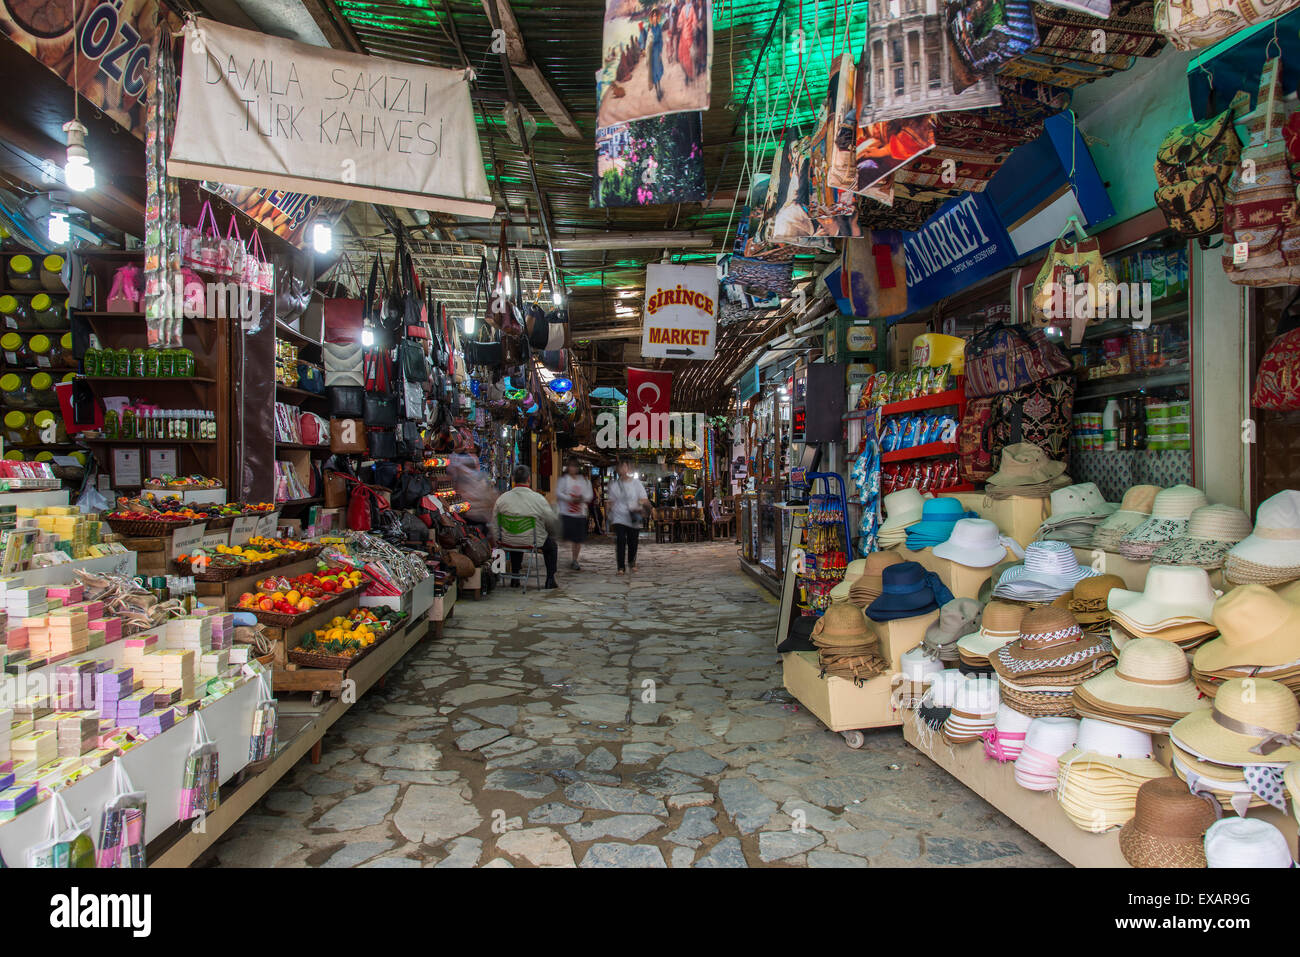 Market in Sirince, Turkey Stock Photo - Alamy